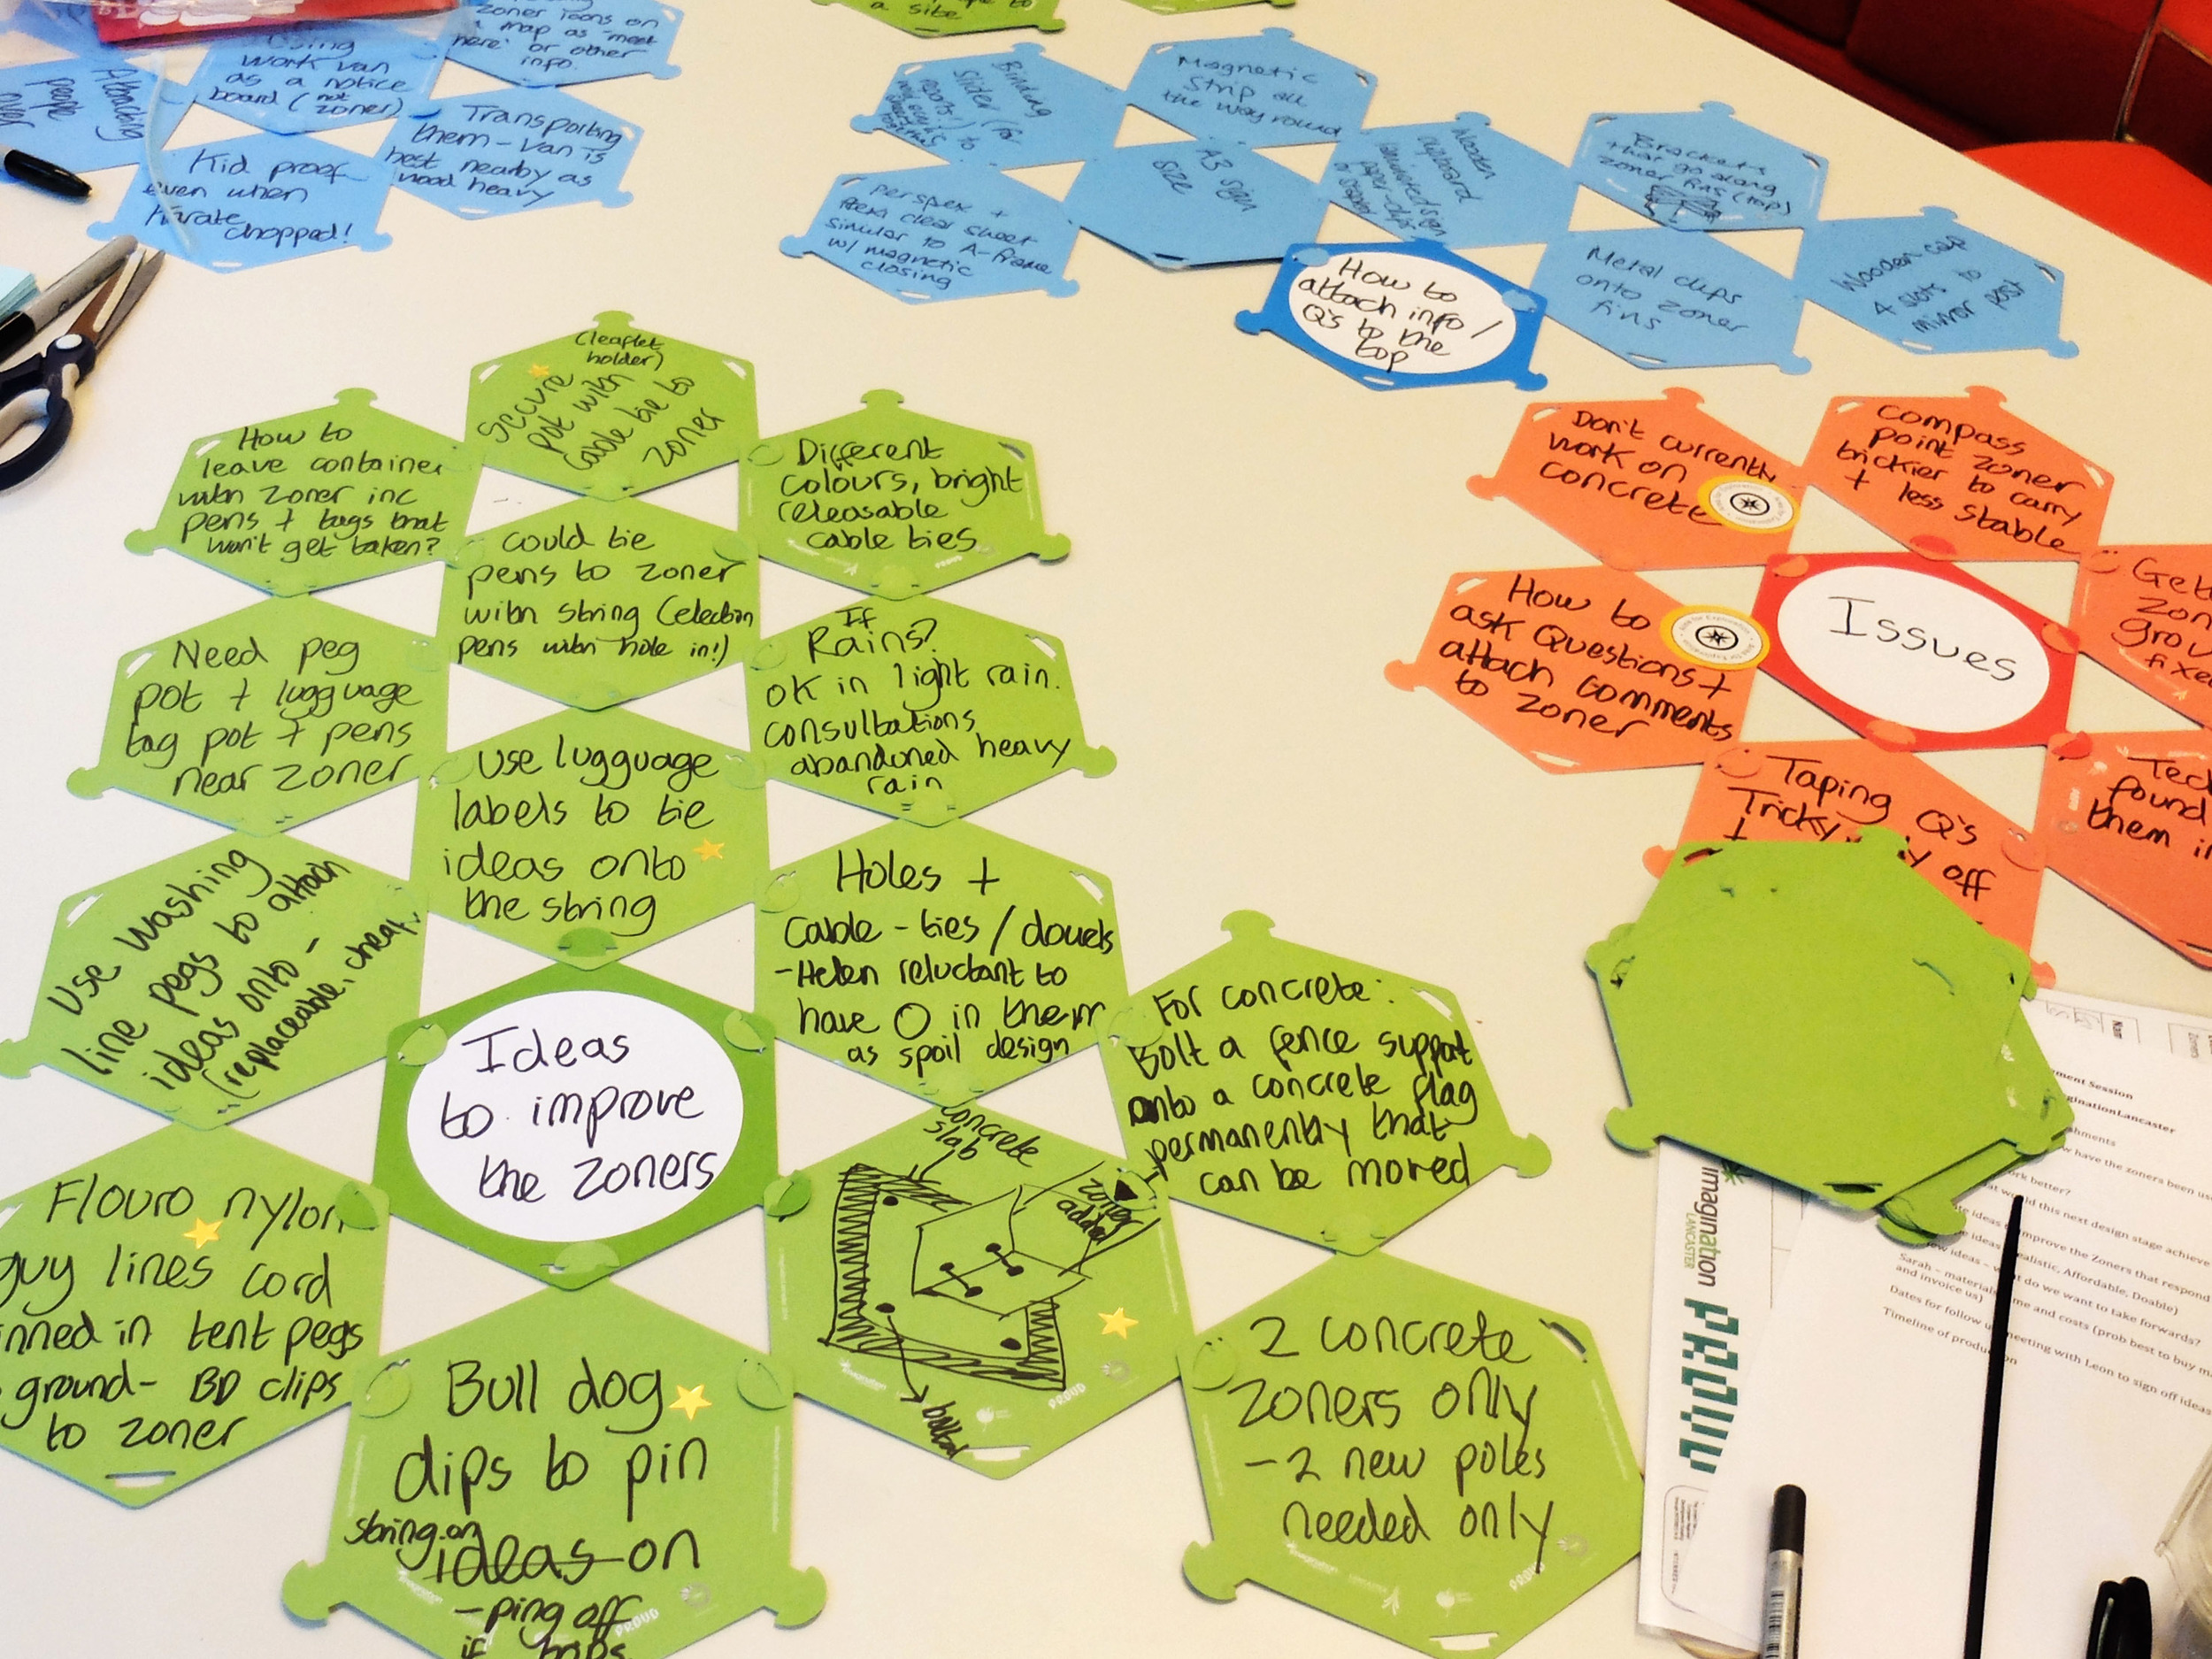  Ideas generation using the PROUD hexagon tool 